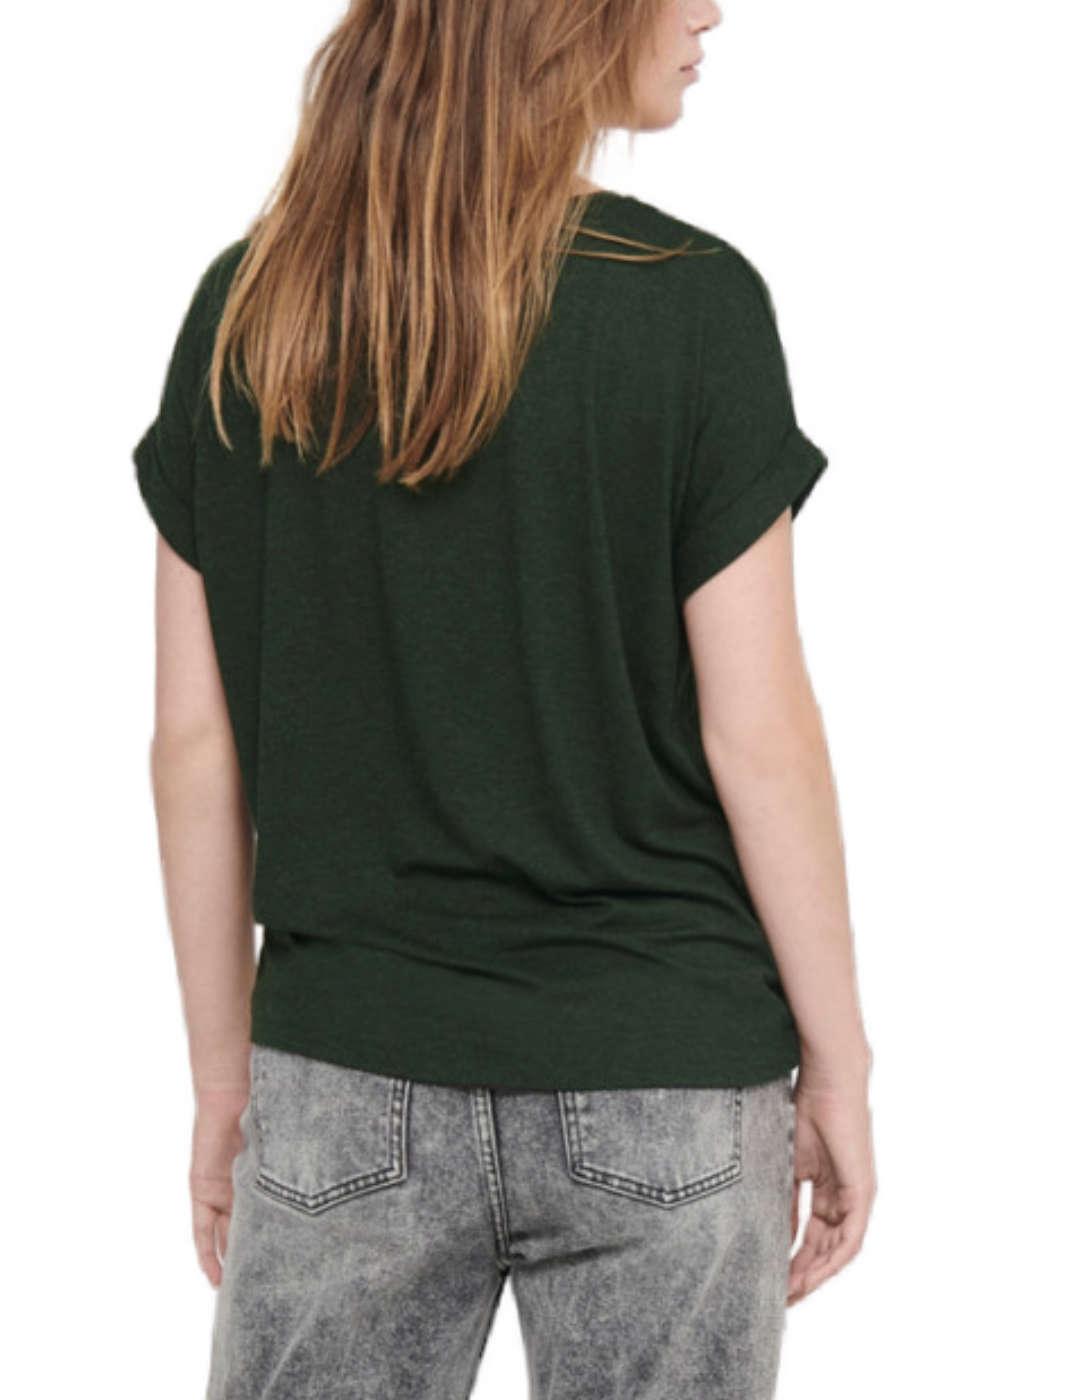 Camiseta Only Monster Noos verde osc para mujer -a